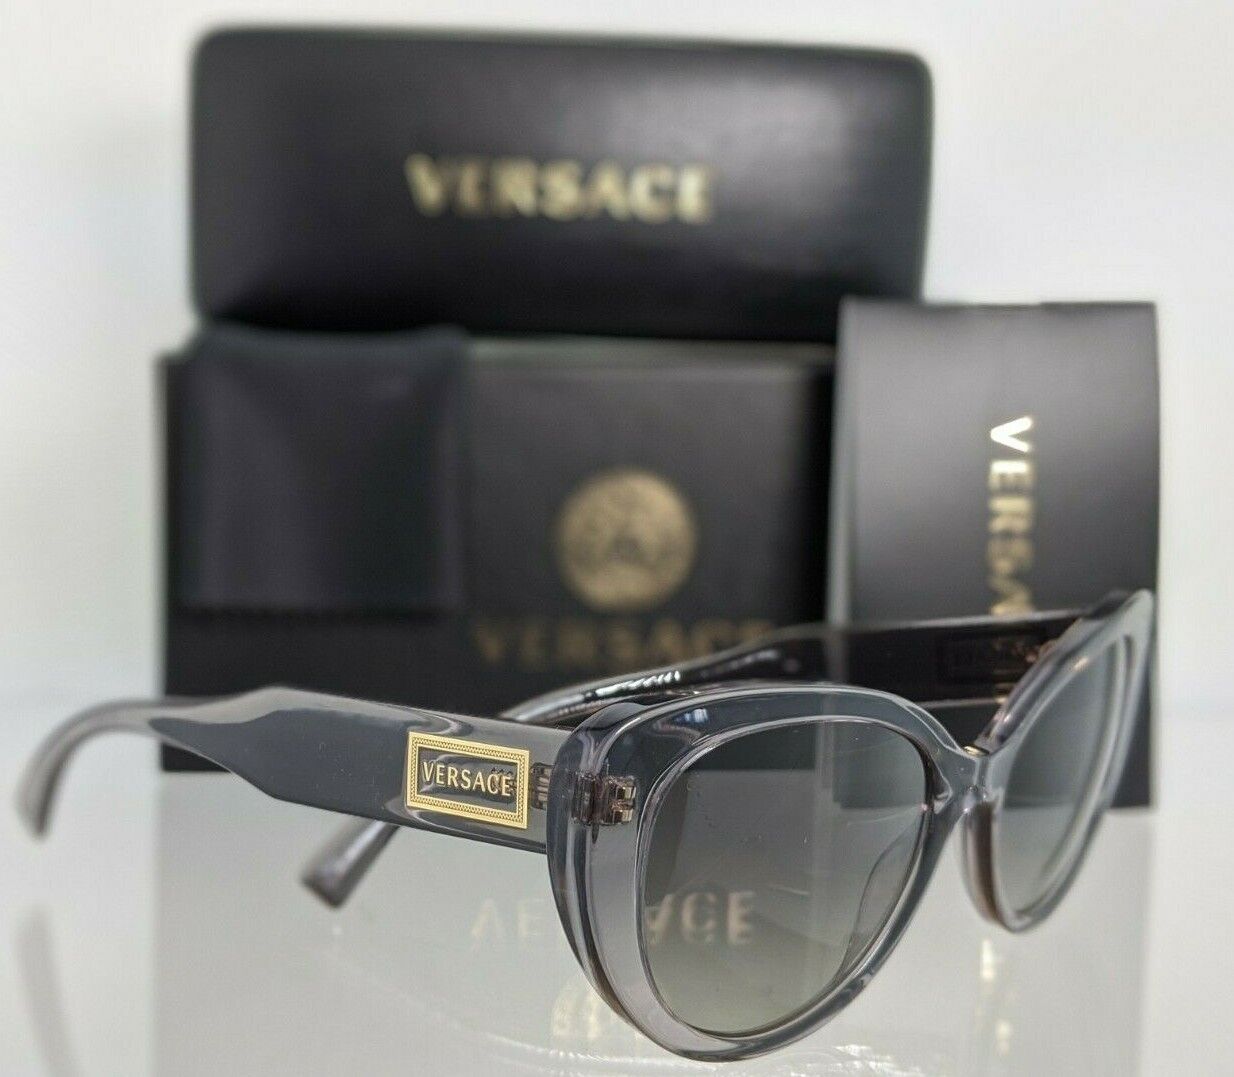 Brand New Authentic Versace Sunglasses Mod. 4378 593/11 54mm Gray Transparent